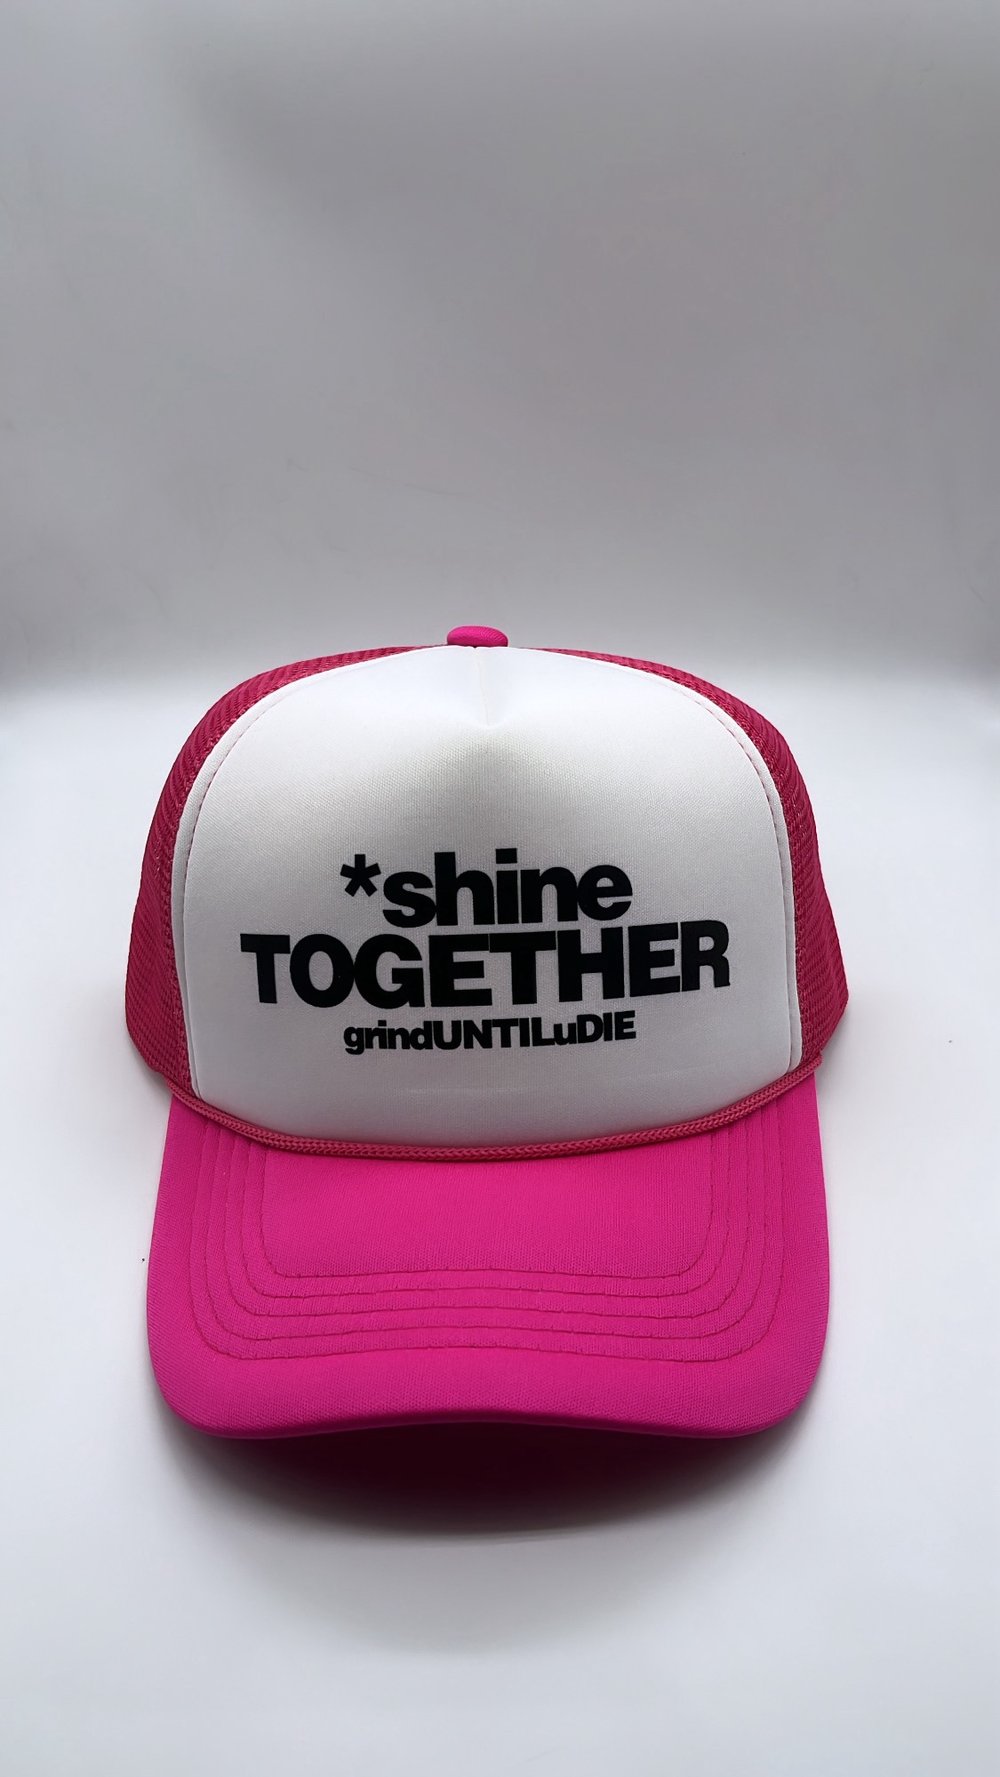 GUUD "shine TOGETHER" Trucker Hat